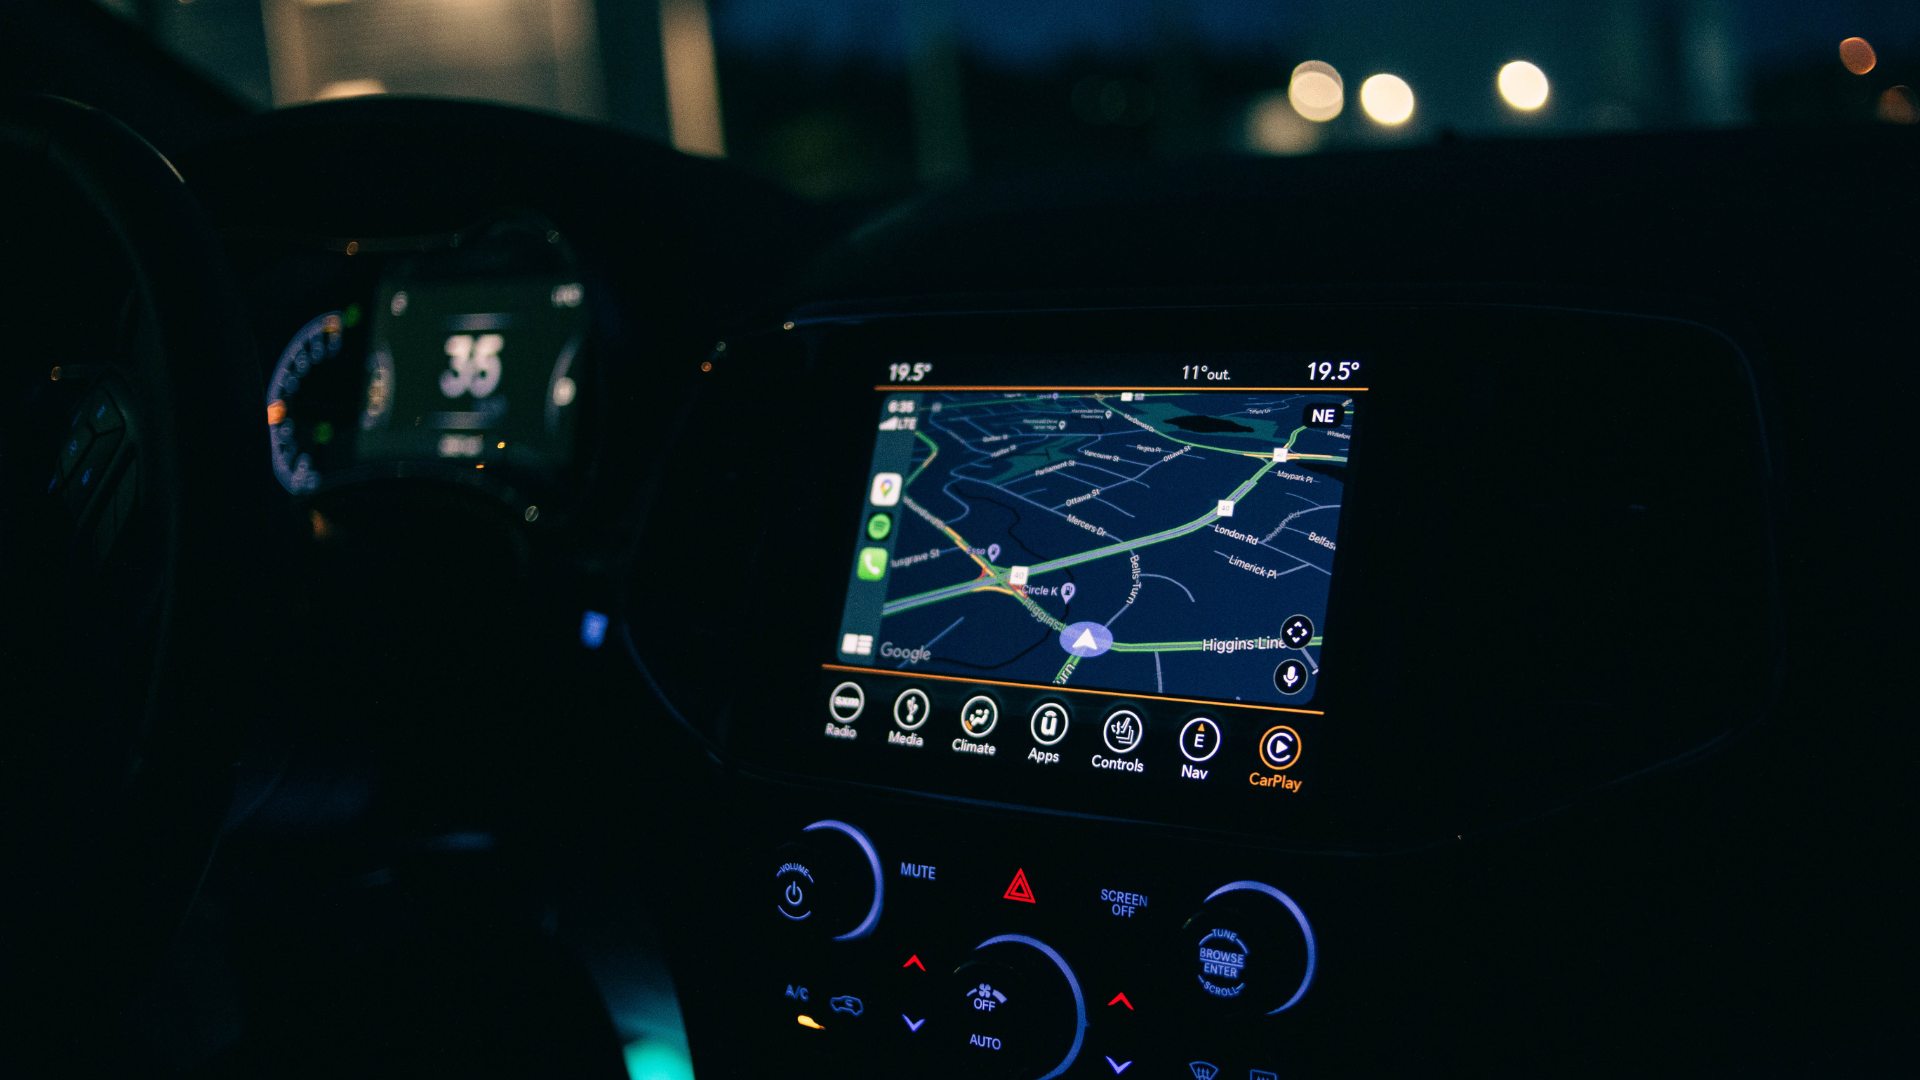 Google Maps displayed on a car's navigational screen